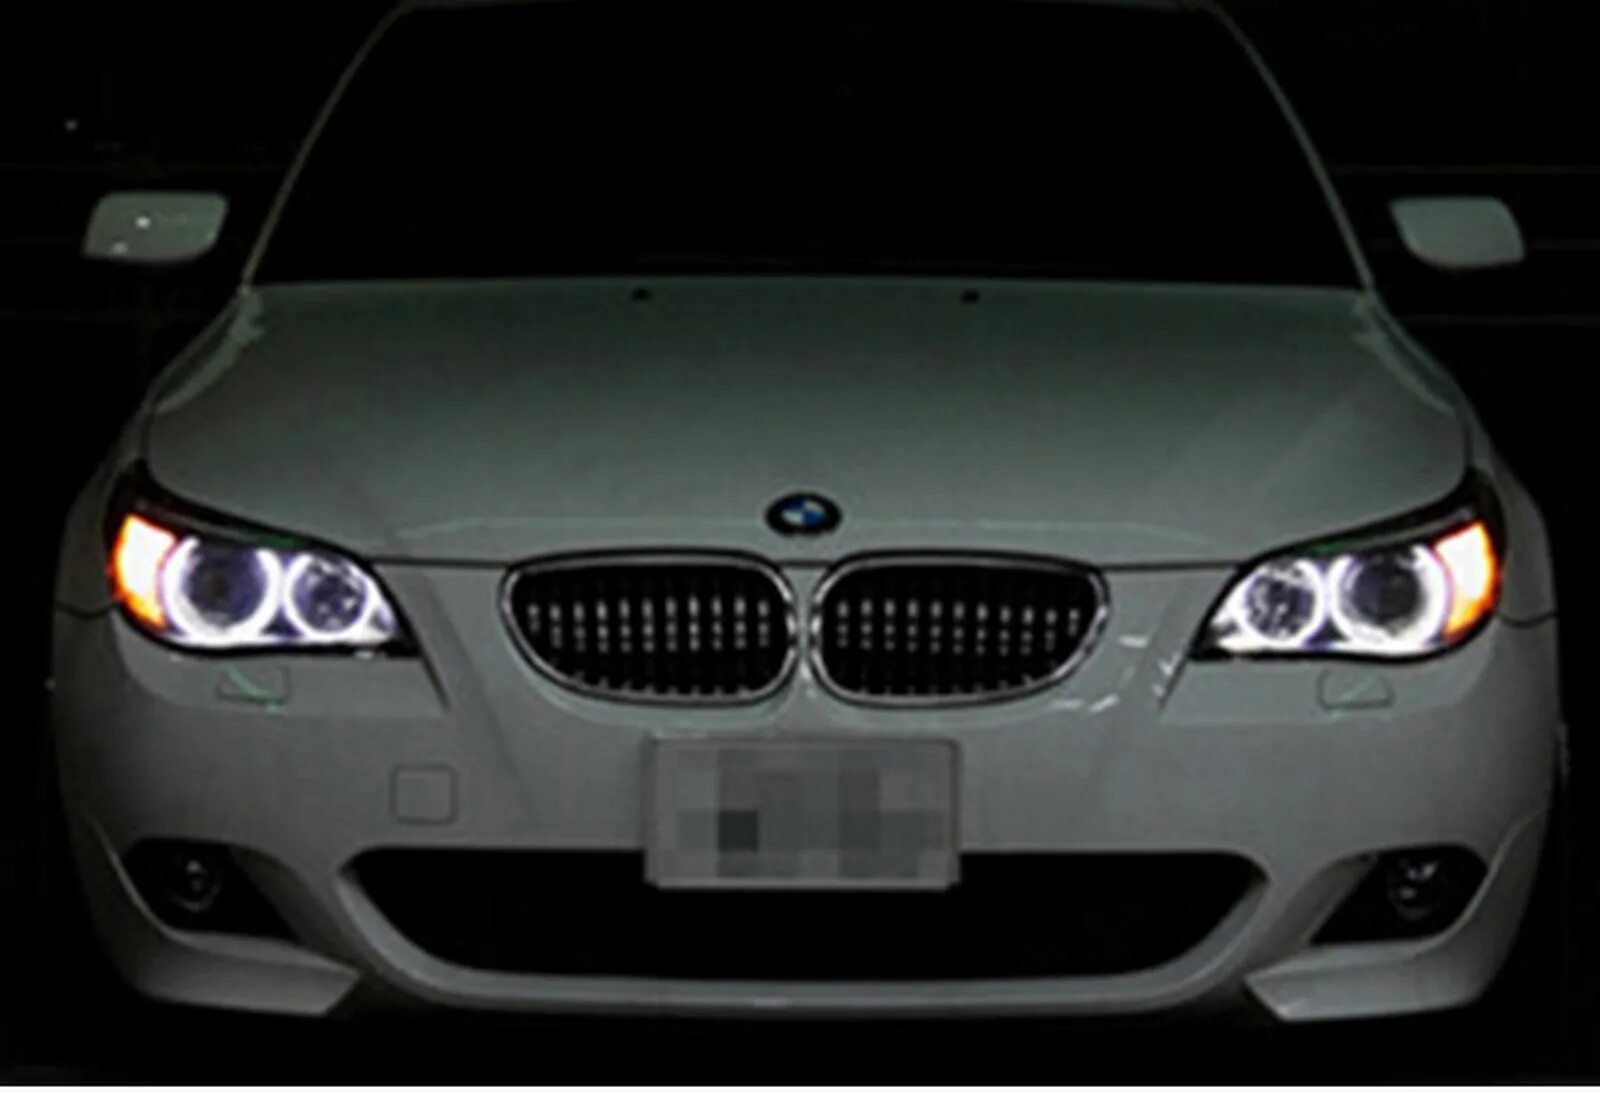 BMW 5 e60 ангельские глазки. BMW e60 Angel Eyes 10 w. Ангельские глазки БМВ e60. Лед глазки BMW e60. Ангельские глазки бмв е60